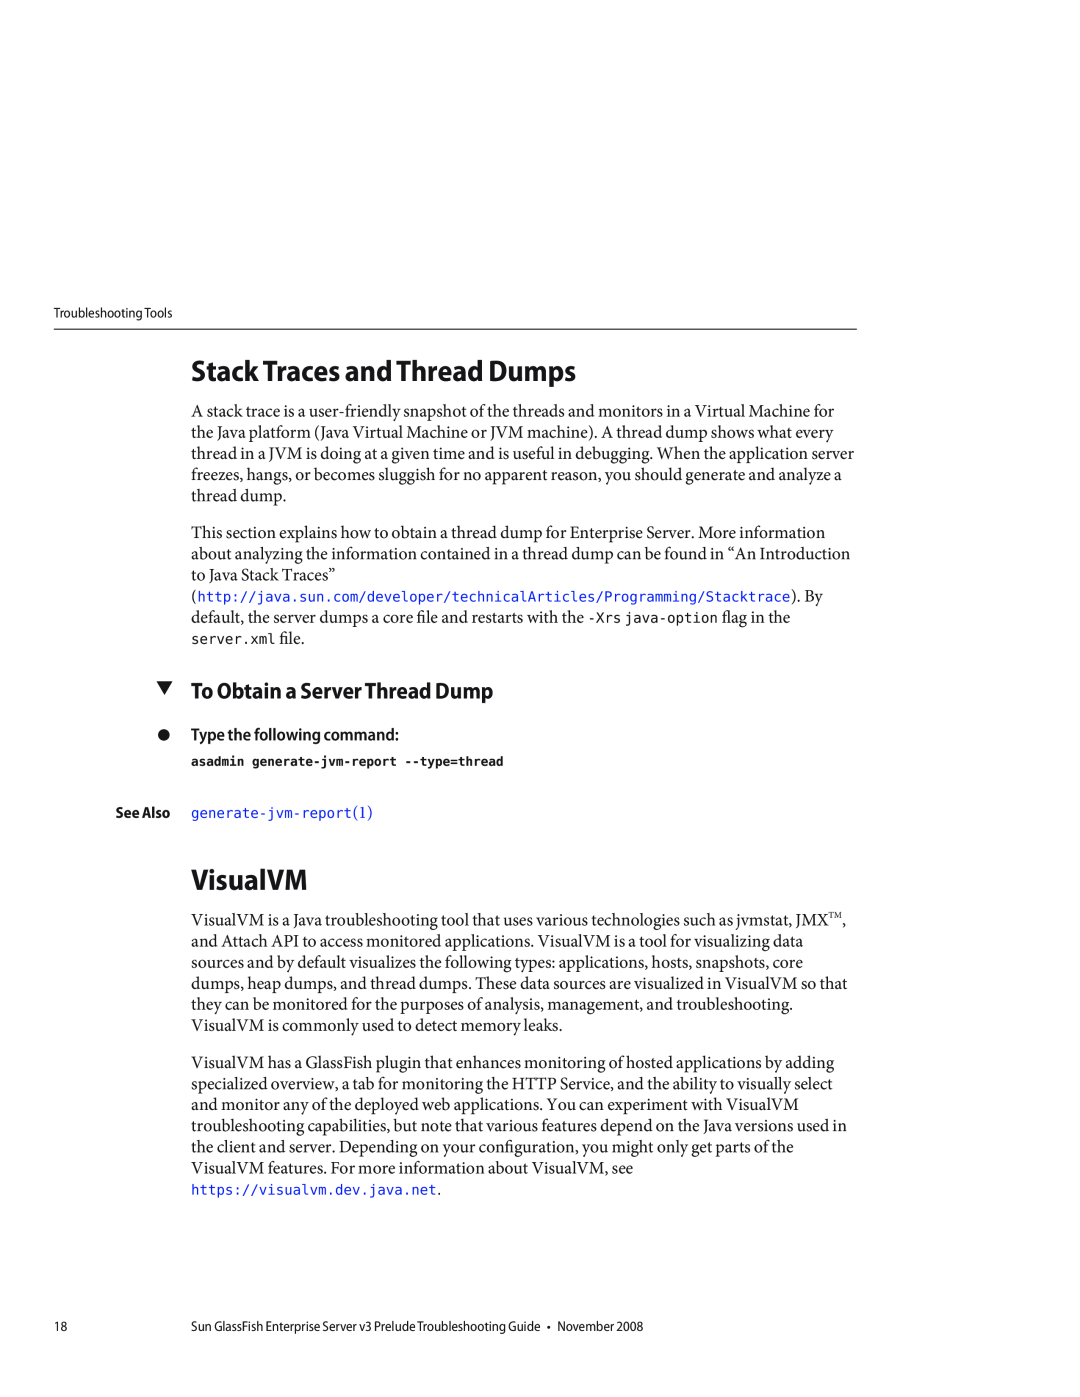 Sun Microsystems 820682310 manual Stack Traces and Thread Dumps, VisualVM, To Obtain a Server Thread Dump 